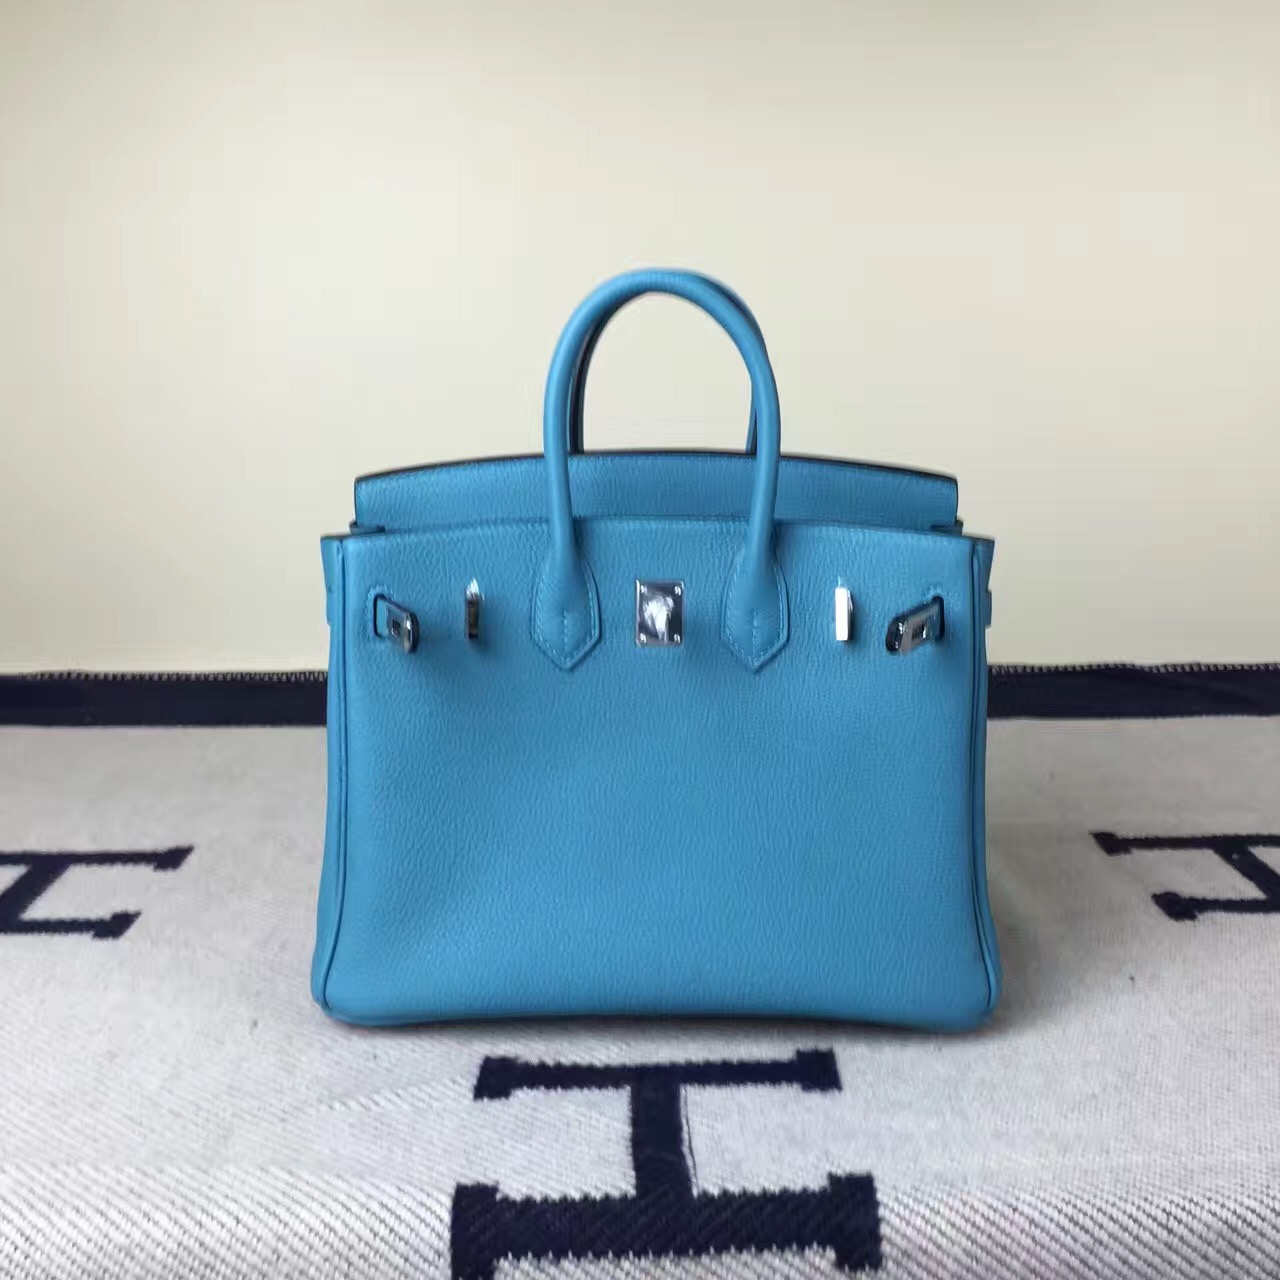 Discount Hermes 7B Turquoise Blue Togo Leather Birkin25cm Handbag